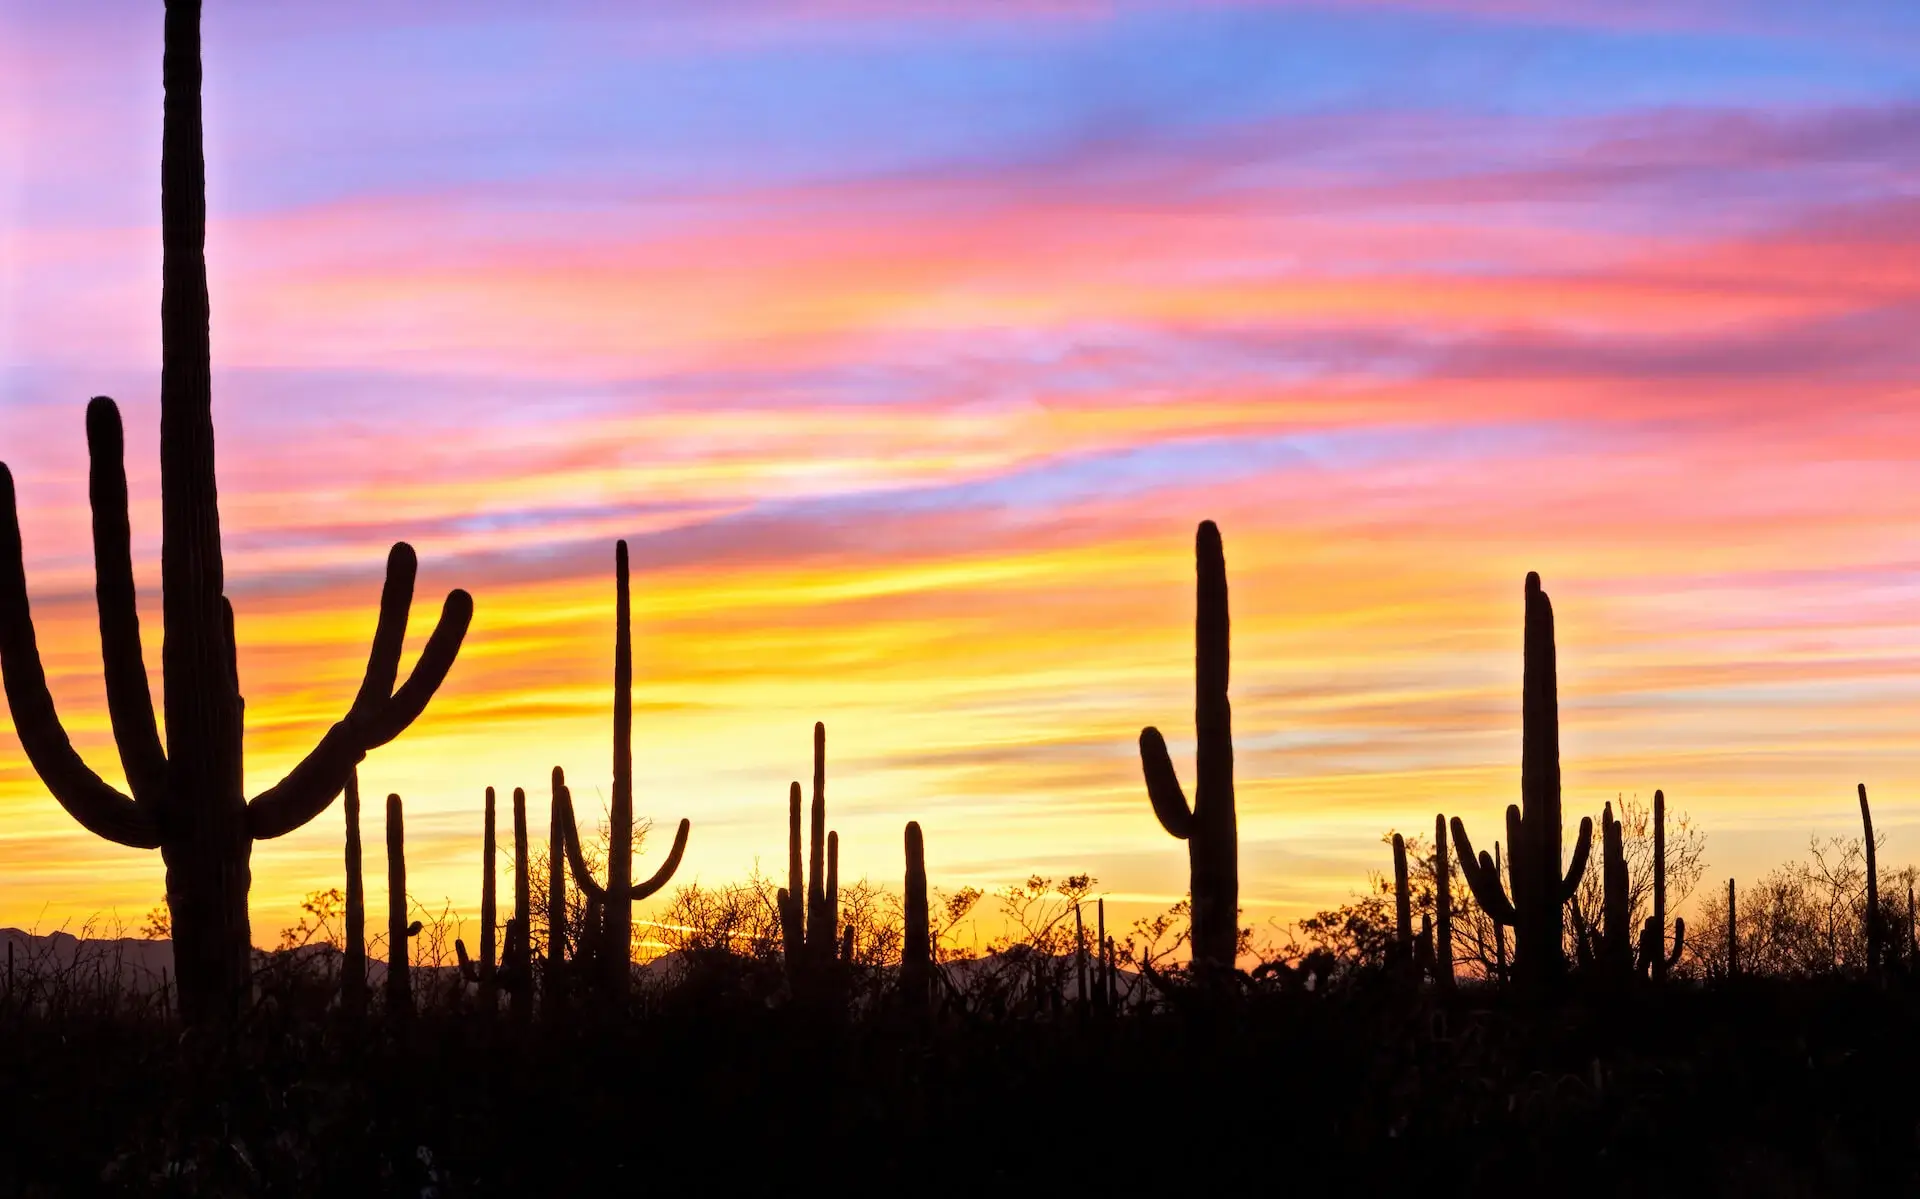 Phoenix, Sonoran Desert Arizona, USA